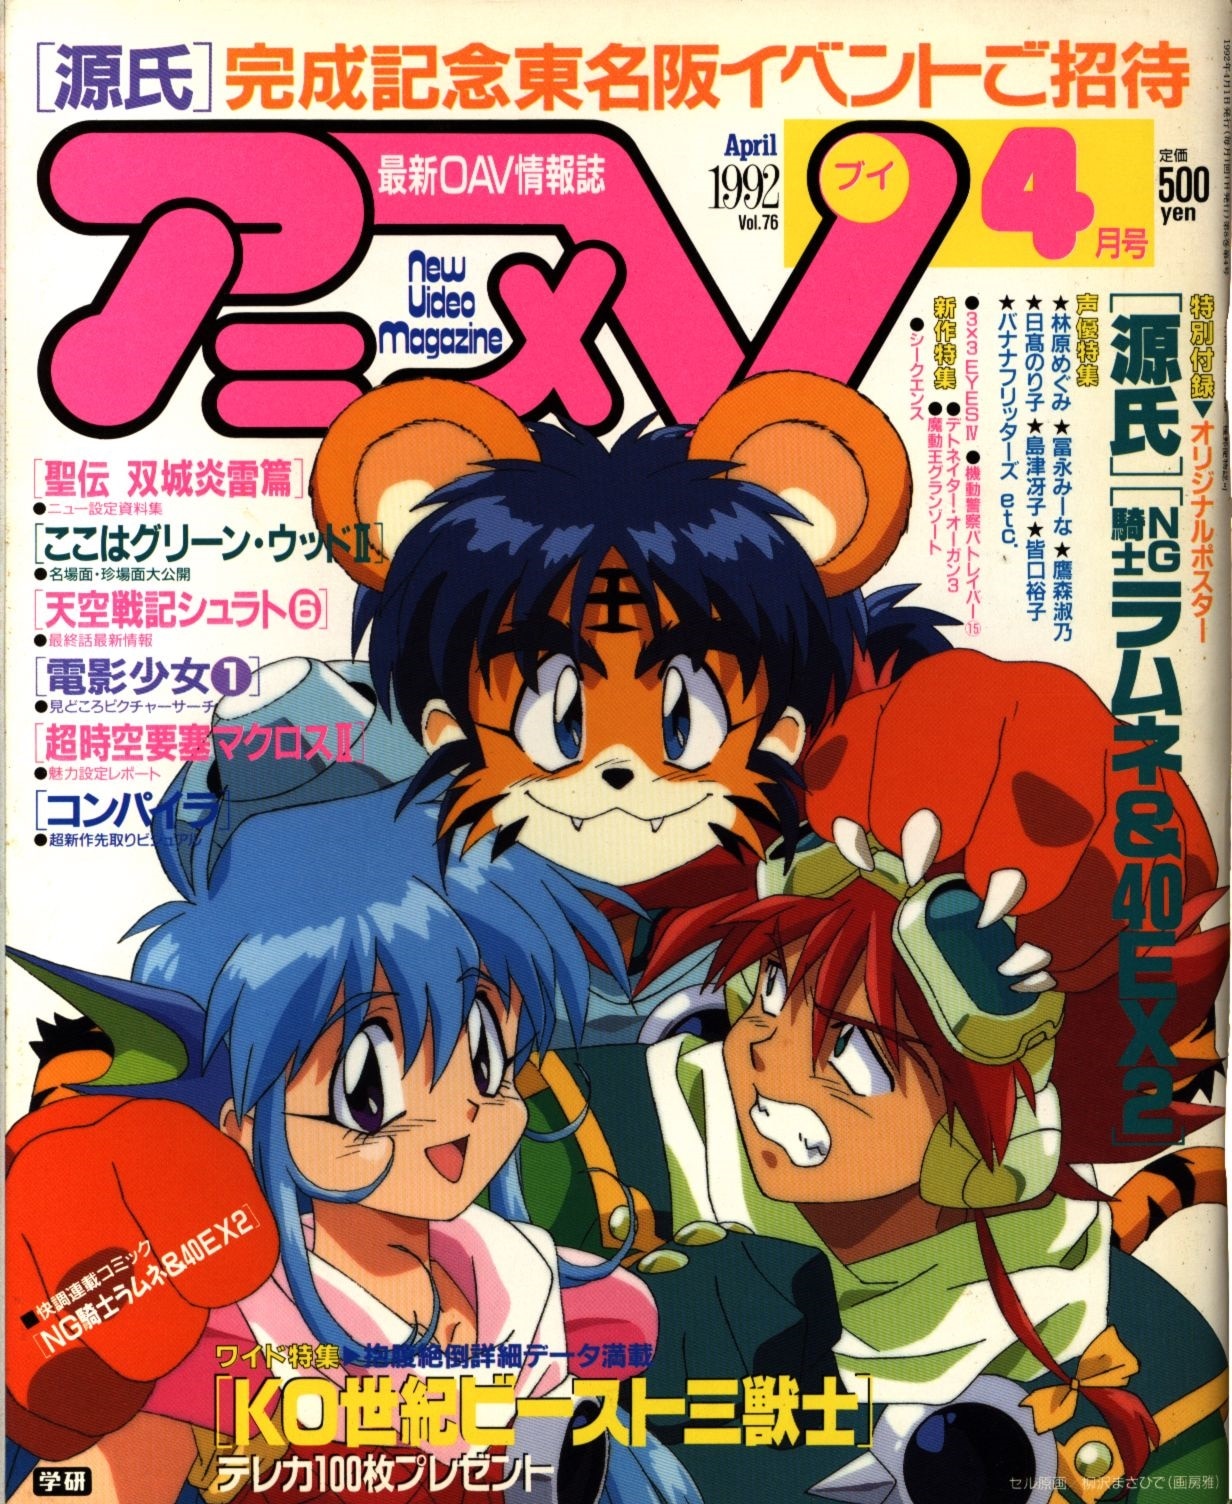 Gakushu Kenkyusha Gakken 1992 1992 Anime Main Magazine Only Anime V92 04 94 Mandarake Online Shop